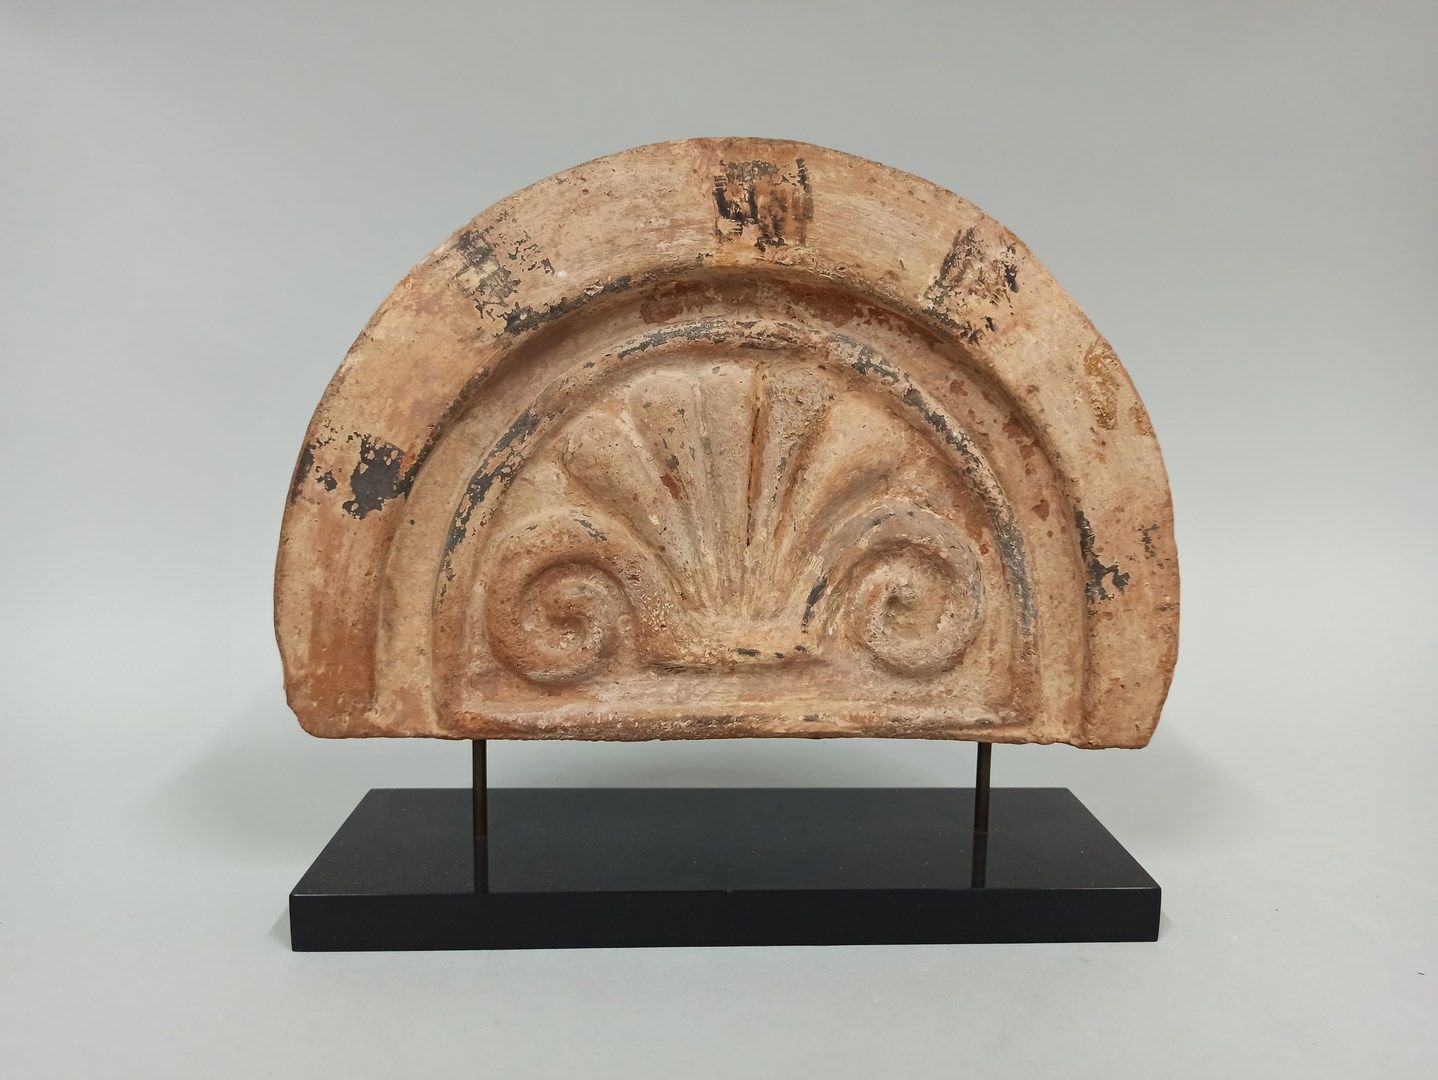 Null 弧形反扣，带掌纹

橙色赤土。缺少背部。

伊特鲁里亚艺术。

6-5世纪

H.16厘米